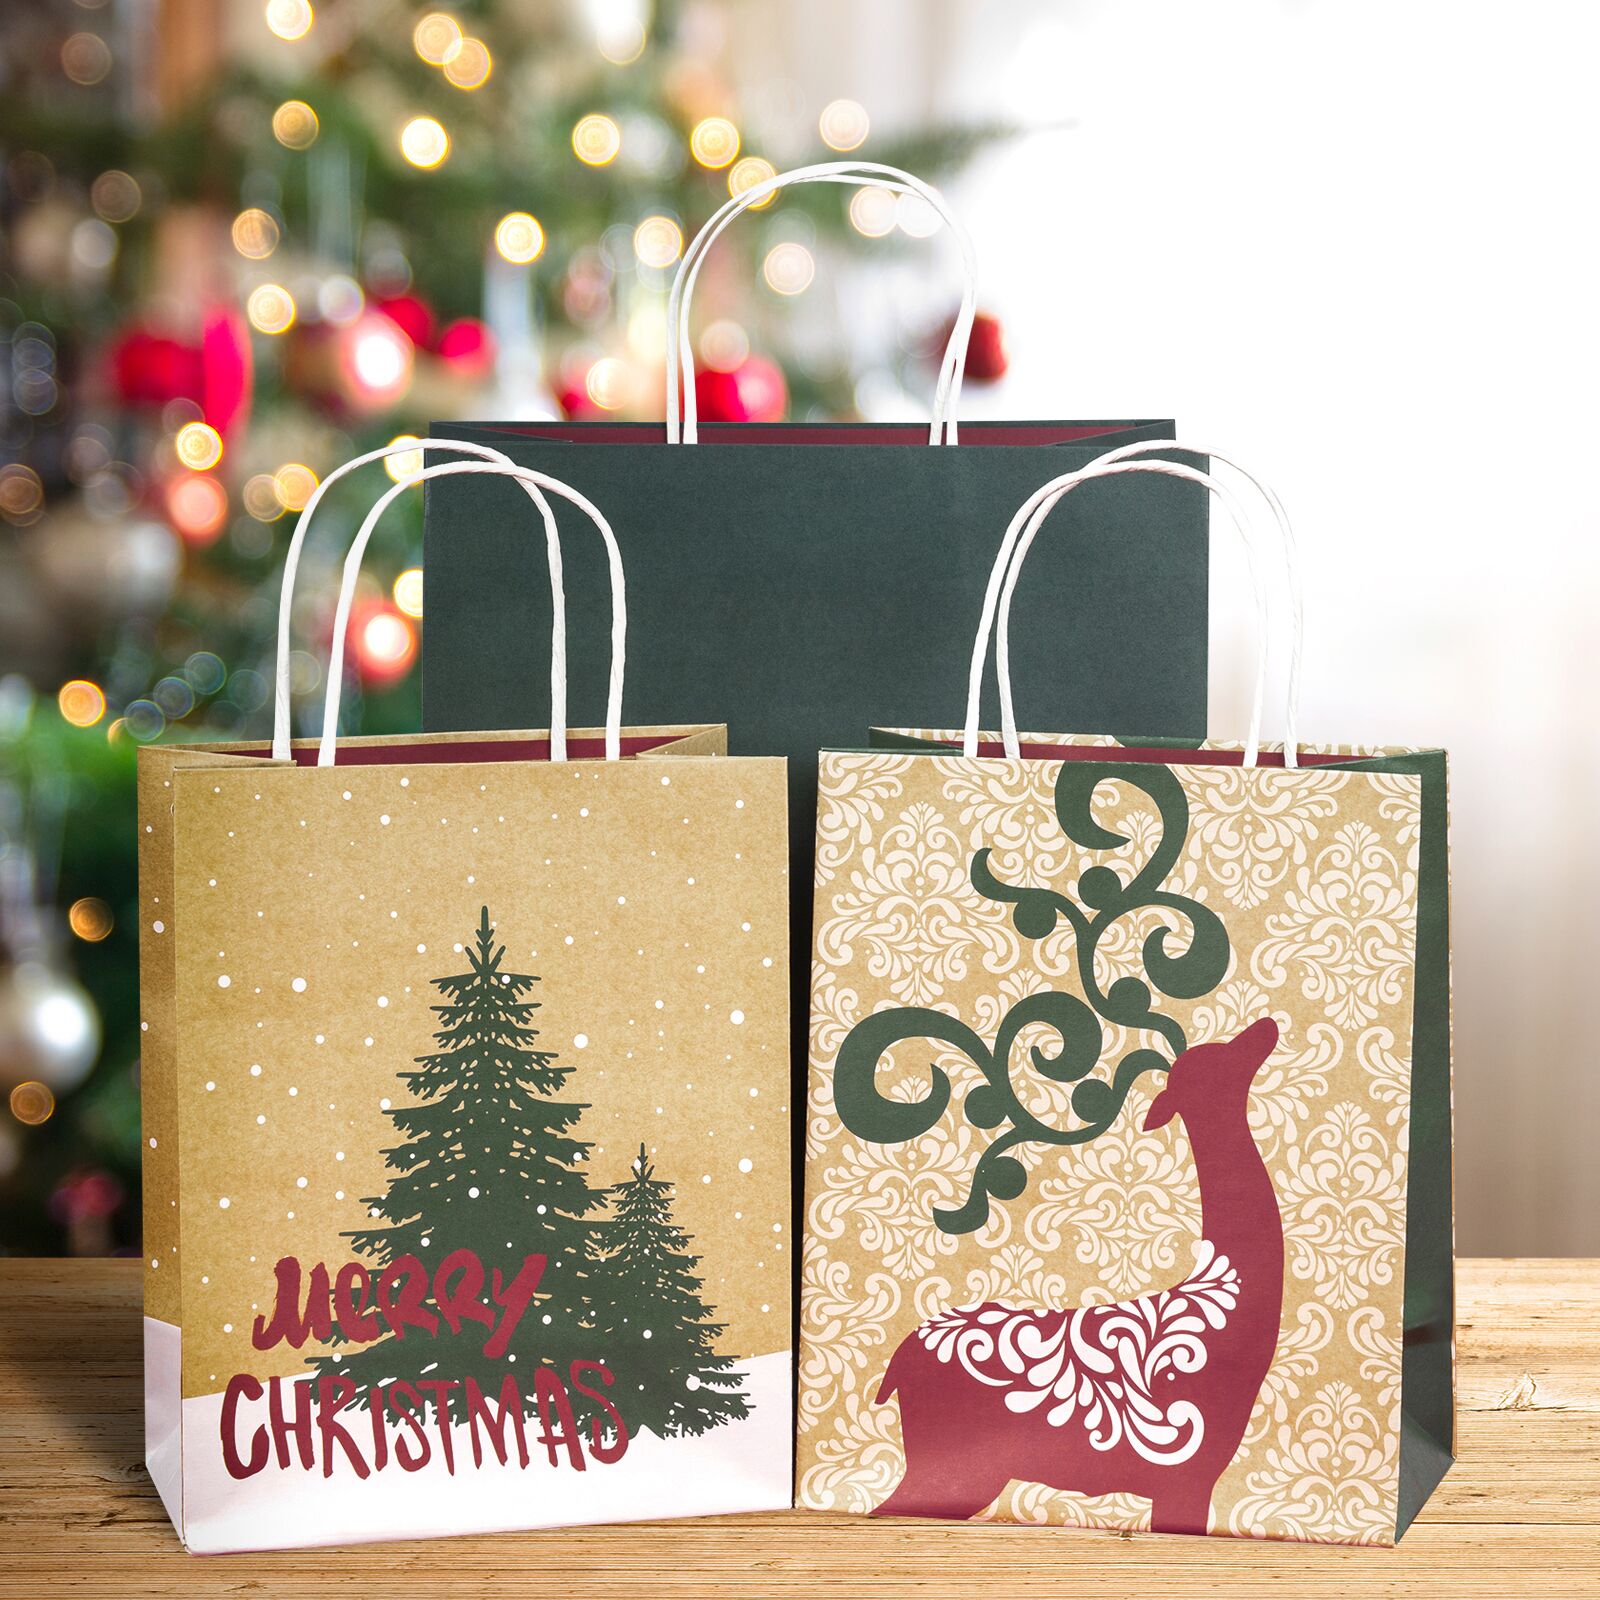 Assort Medium & Large Christmas Gift Bags - Christmas Trees/ Pine Trees/ Deer/ Red Cars - 8 Pack